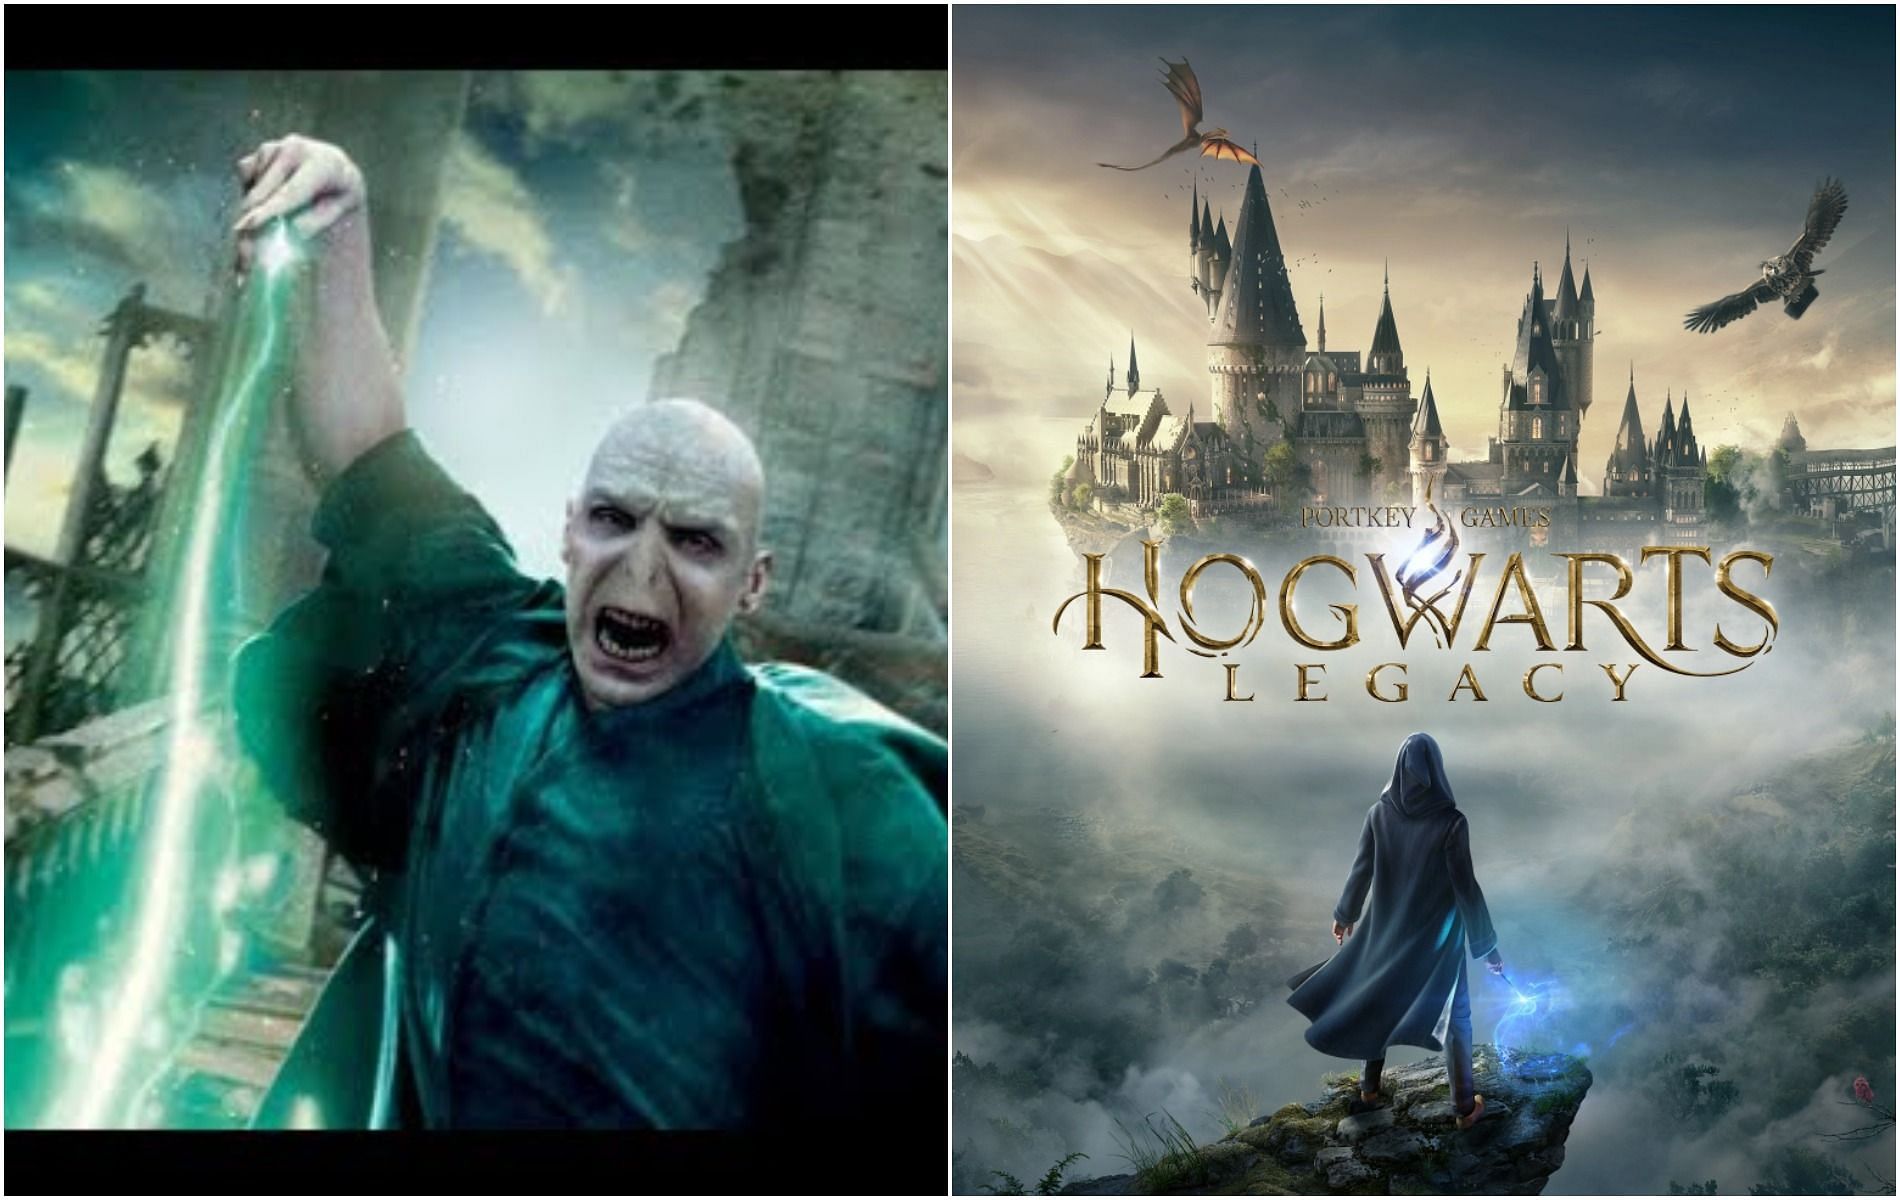 Hogwarts Legacy might avoid the unforgivable curses (Images via Warner Bros, Portkey Games)